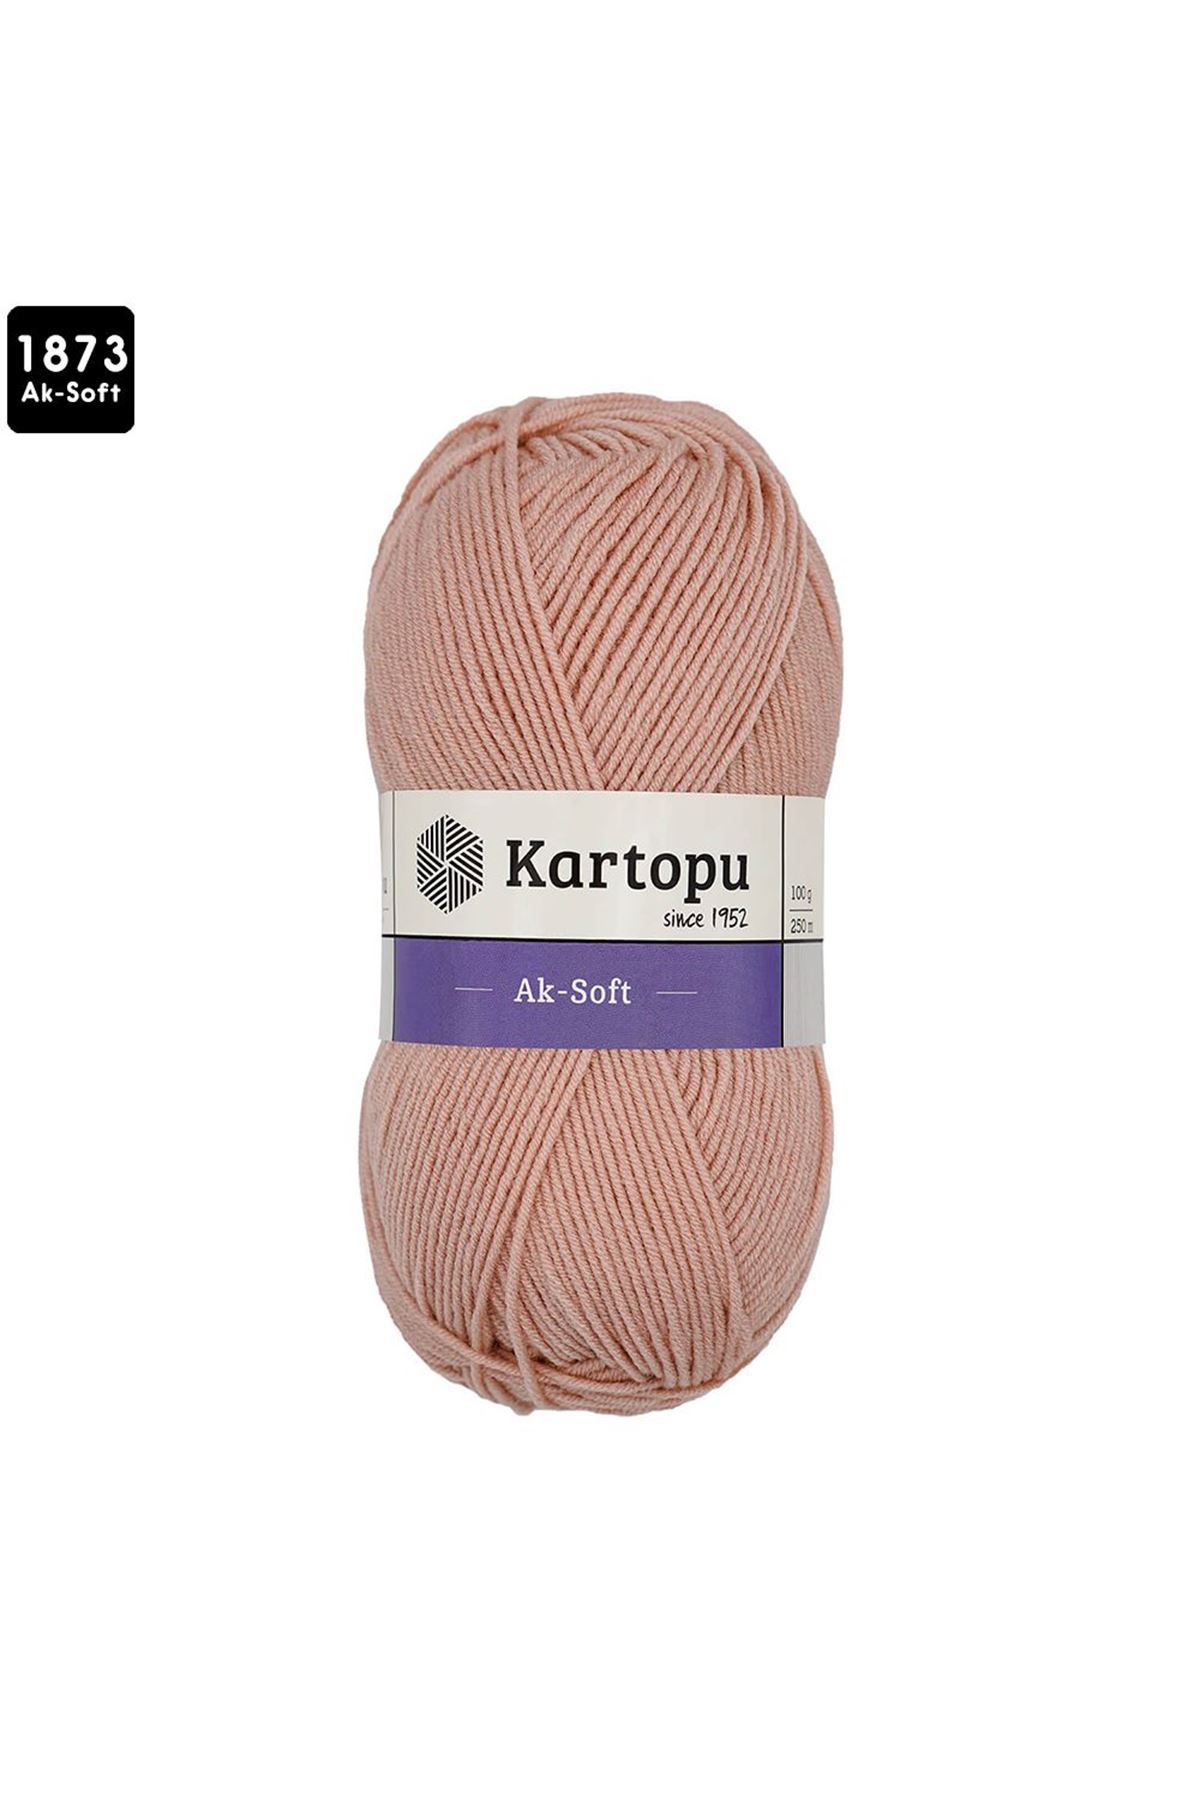 Kartopu Ak-Soft Renk No:1873